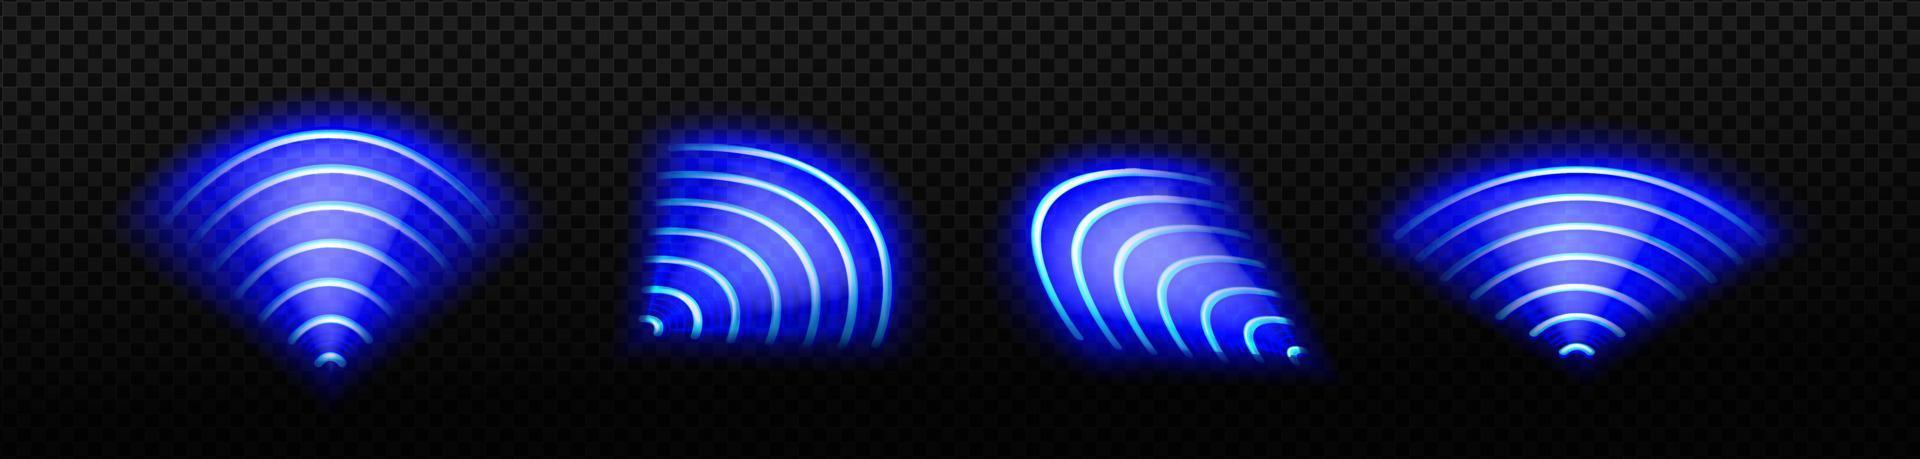 Wi-Fi ljus effekt, blå neon signal sensor vågor vektor